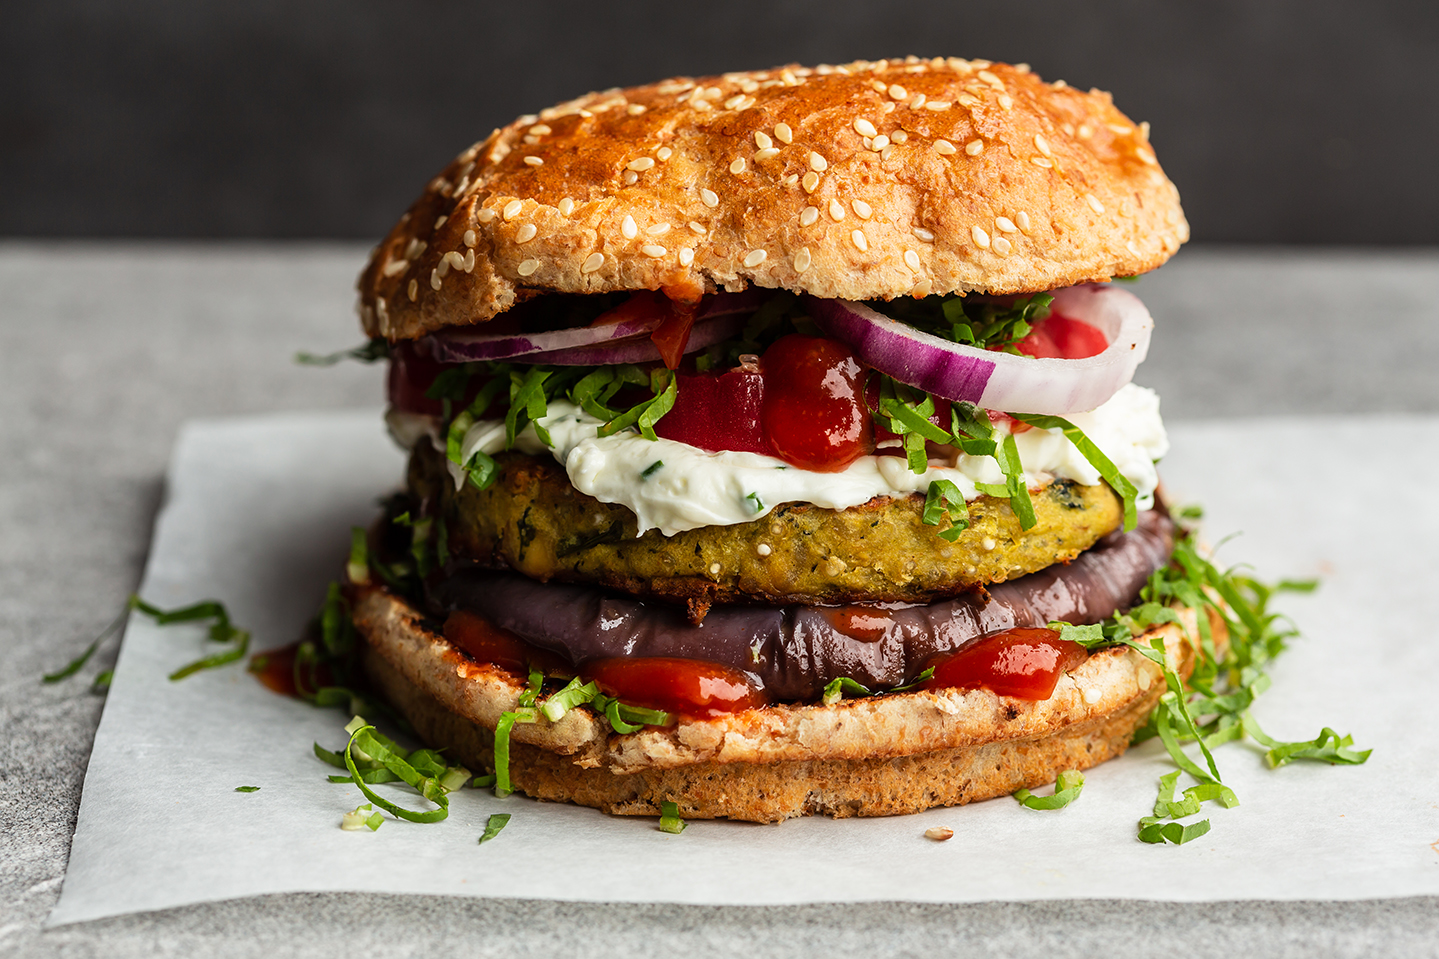 A veggie burger